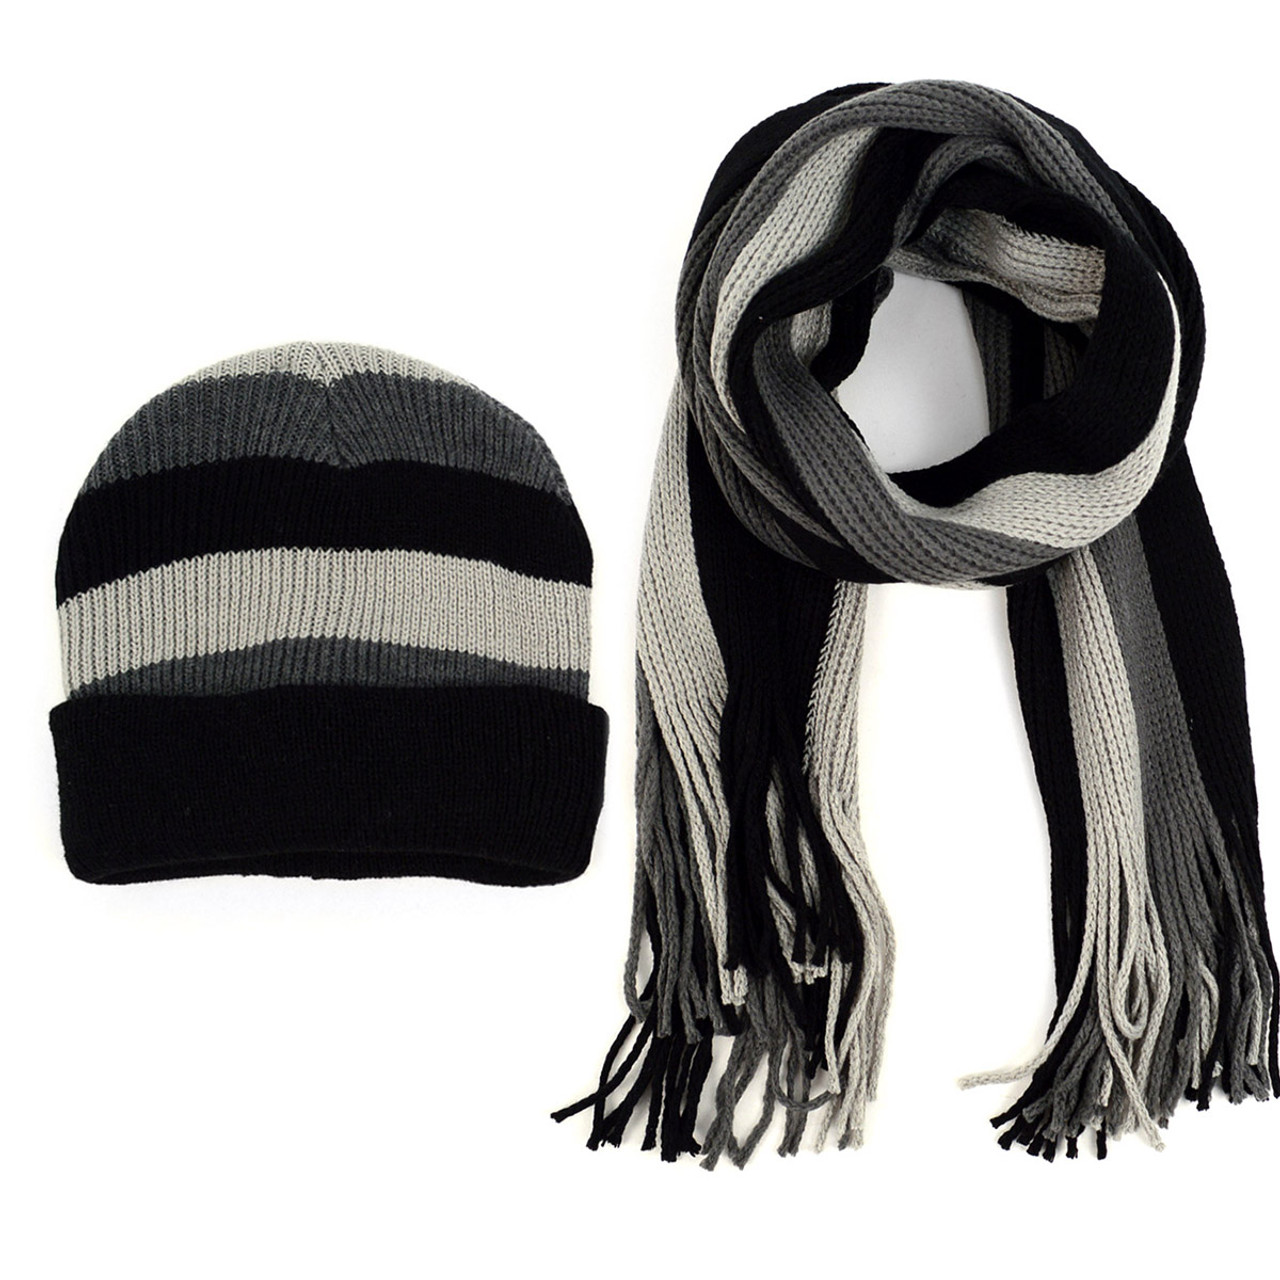 Men's Winter Knit Hat & Scarf Set